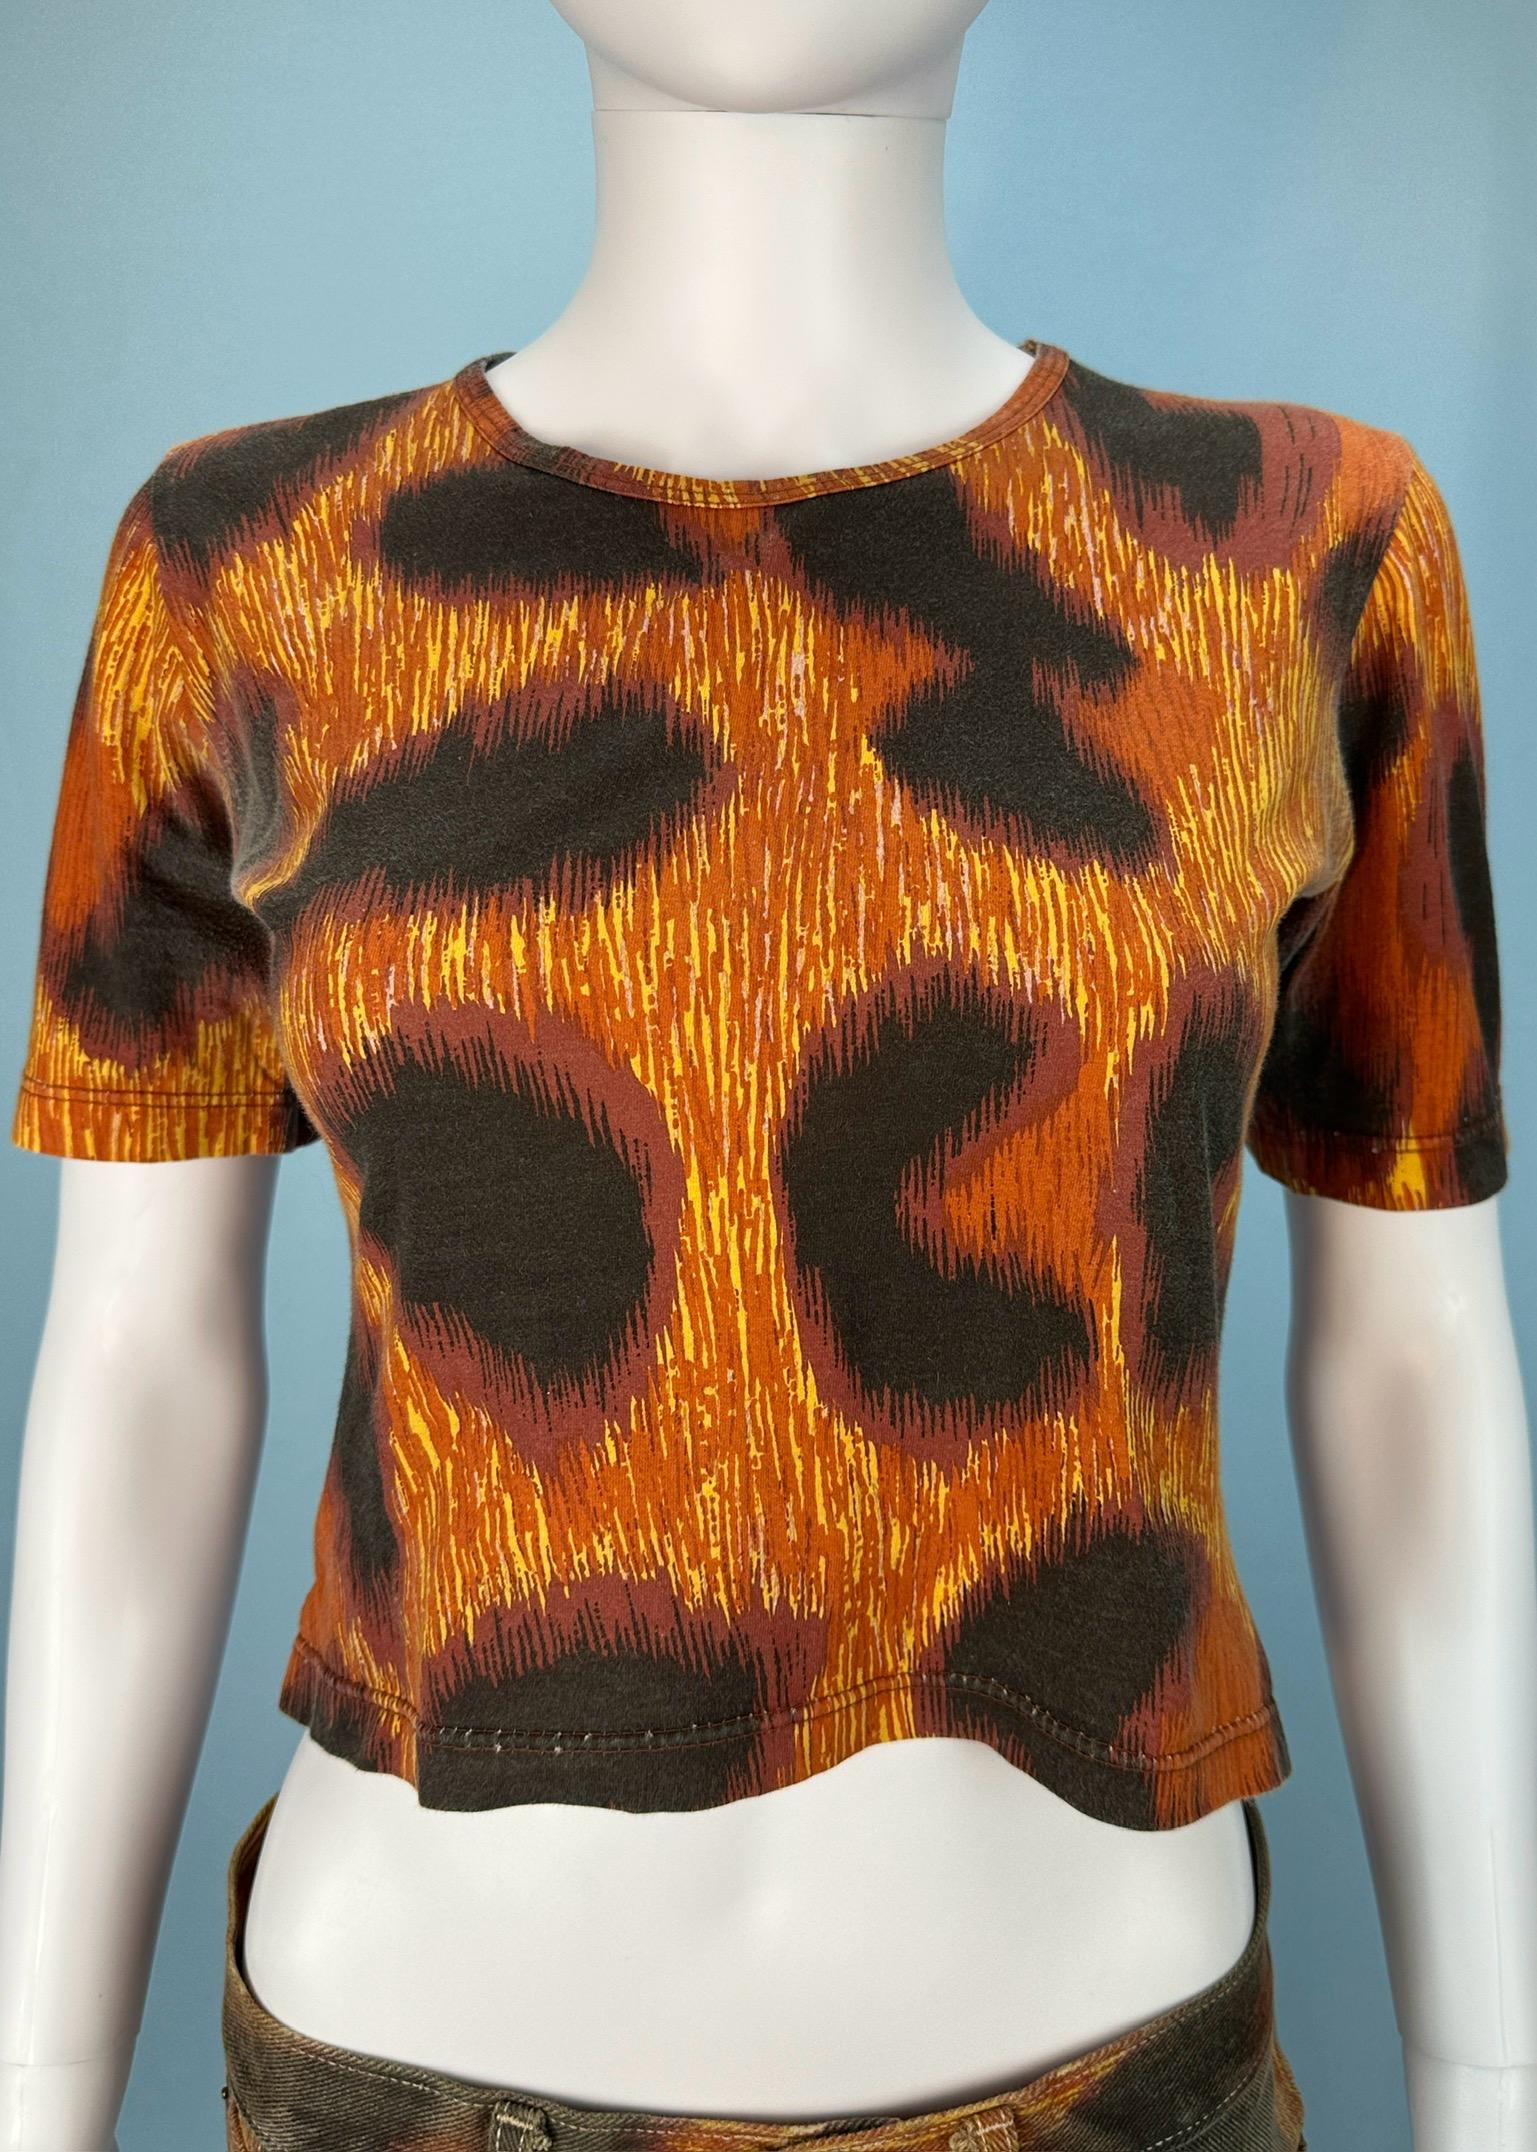 Vivienne Westwood Spring 1994 “Cafe Society” Runway Leopard Jeans & T Shirt Set For Sale 1